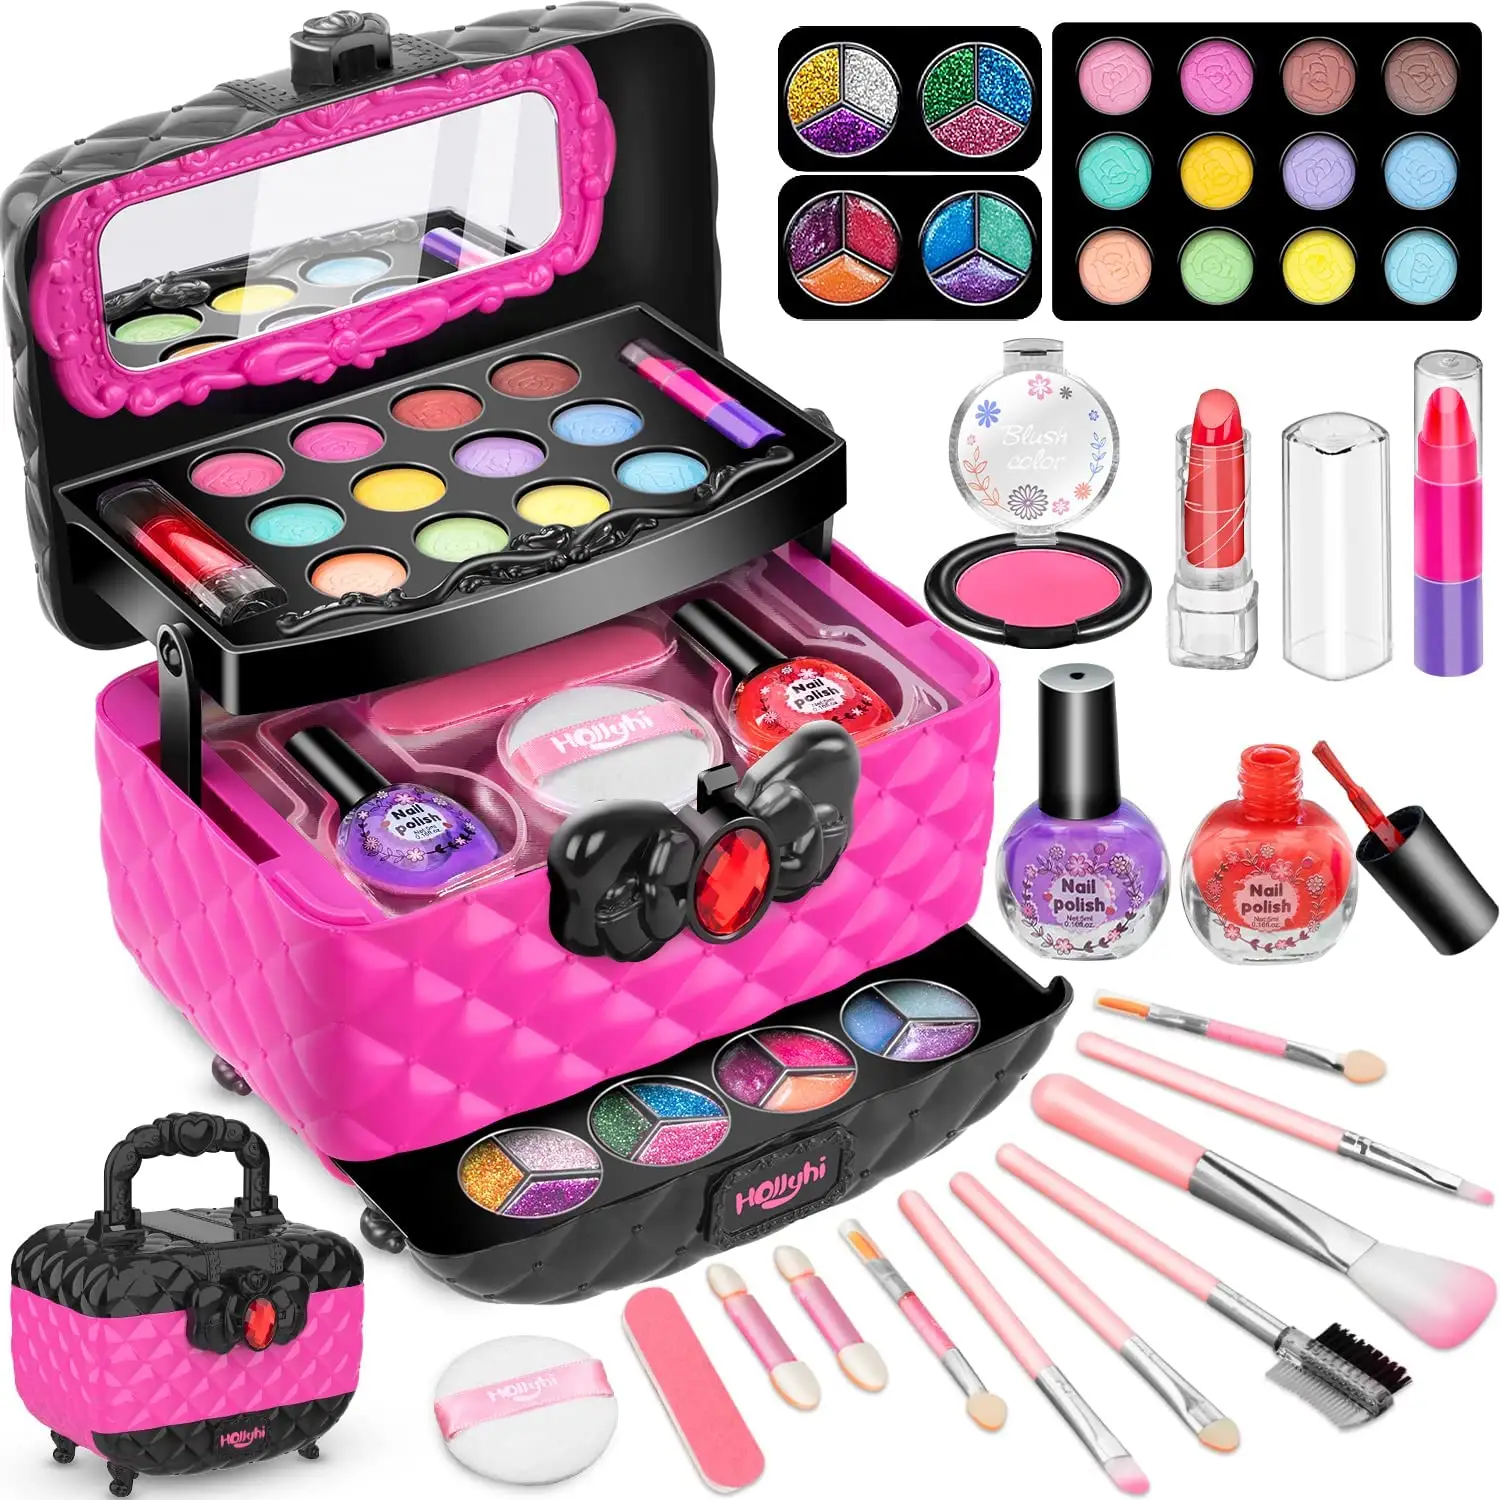 Huimer kit de brinquedo de maquiagem para meninas, conjunto de maquiagem lavável, brinquedo com estojo cosmético real para menina